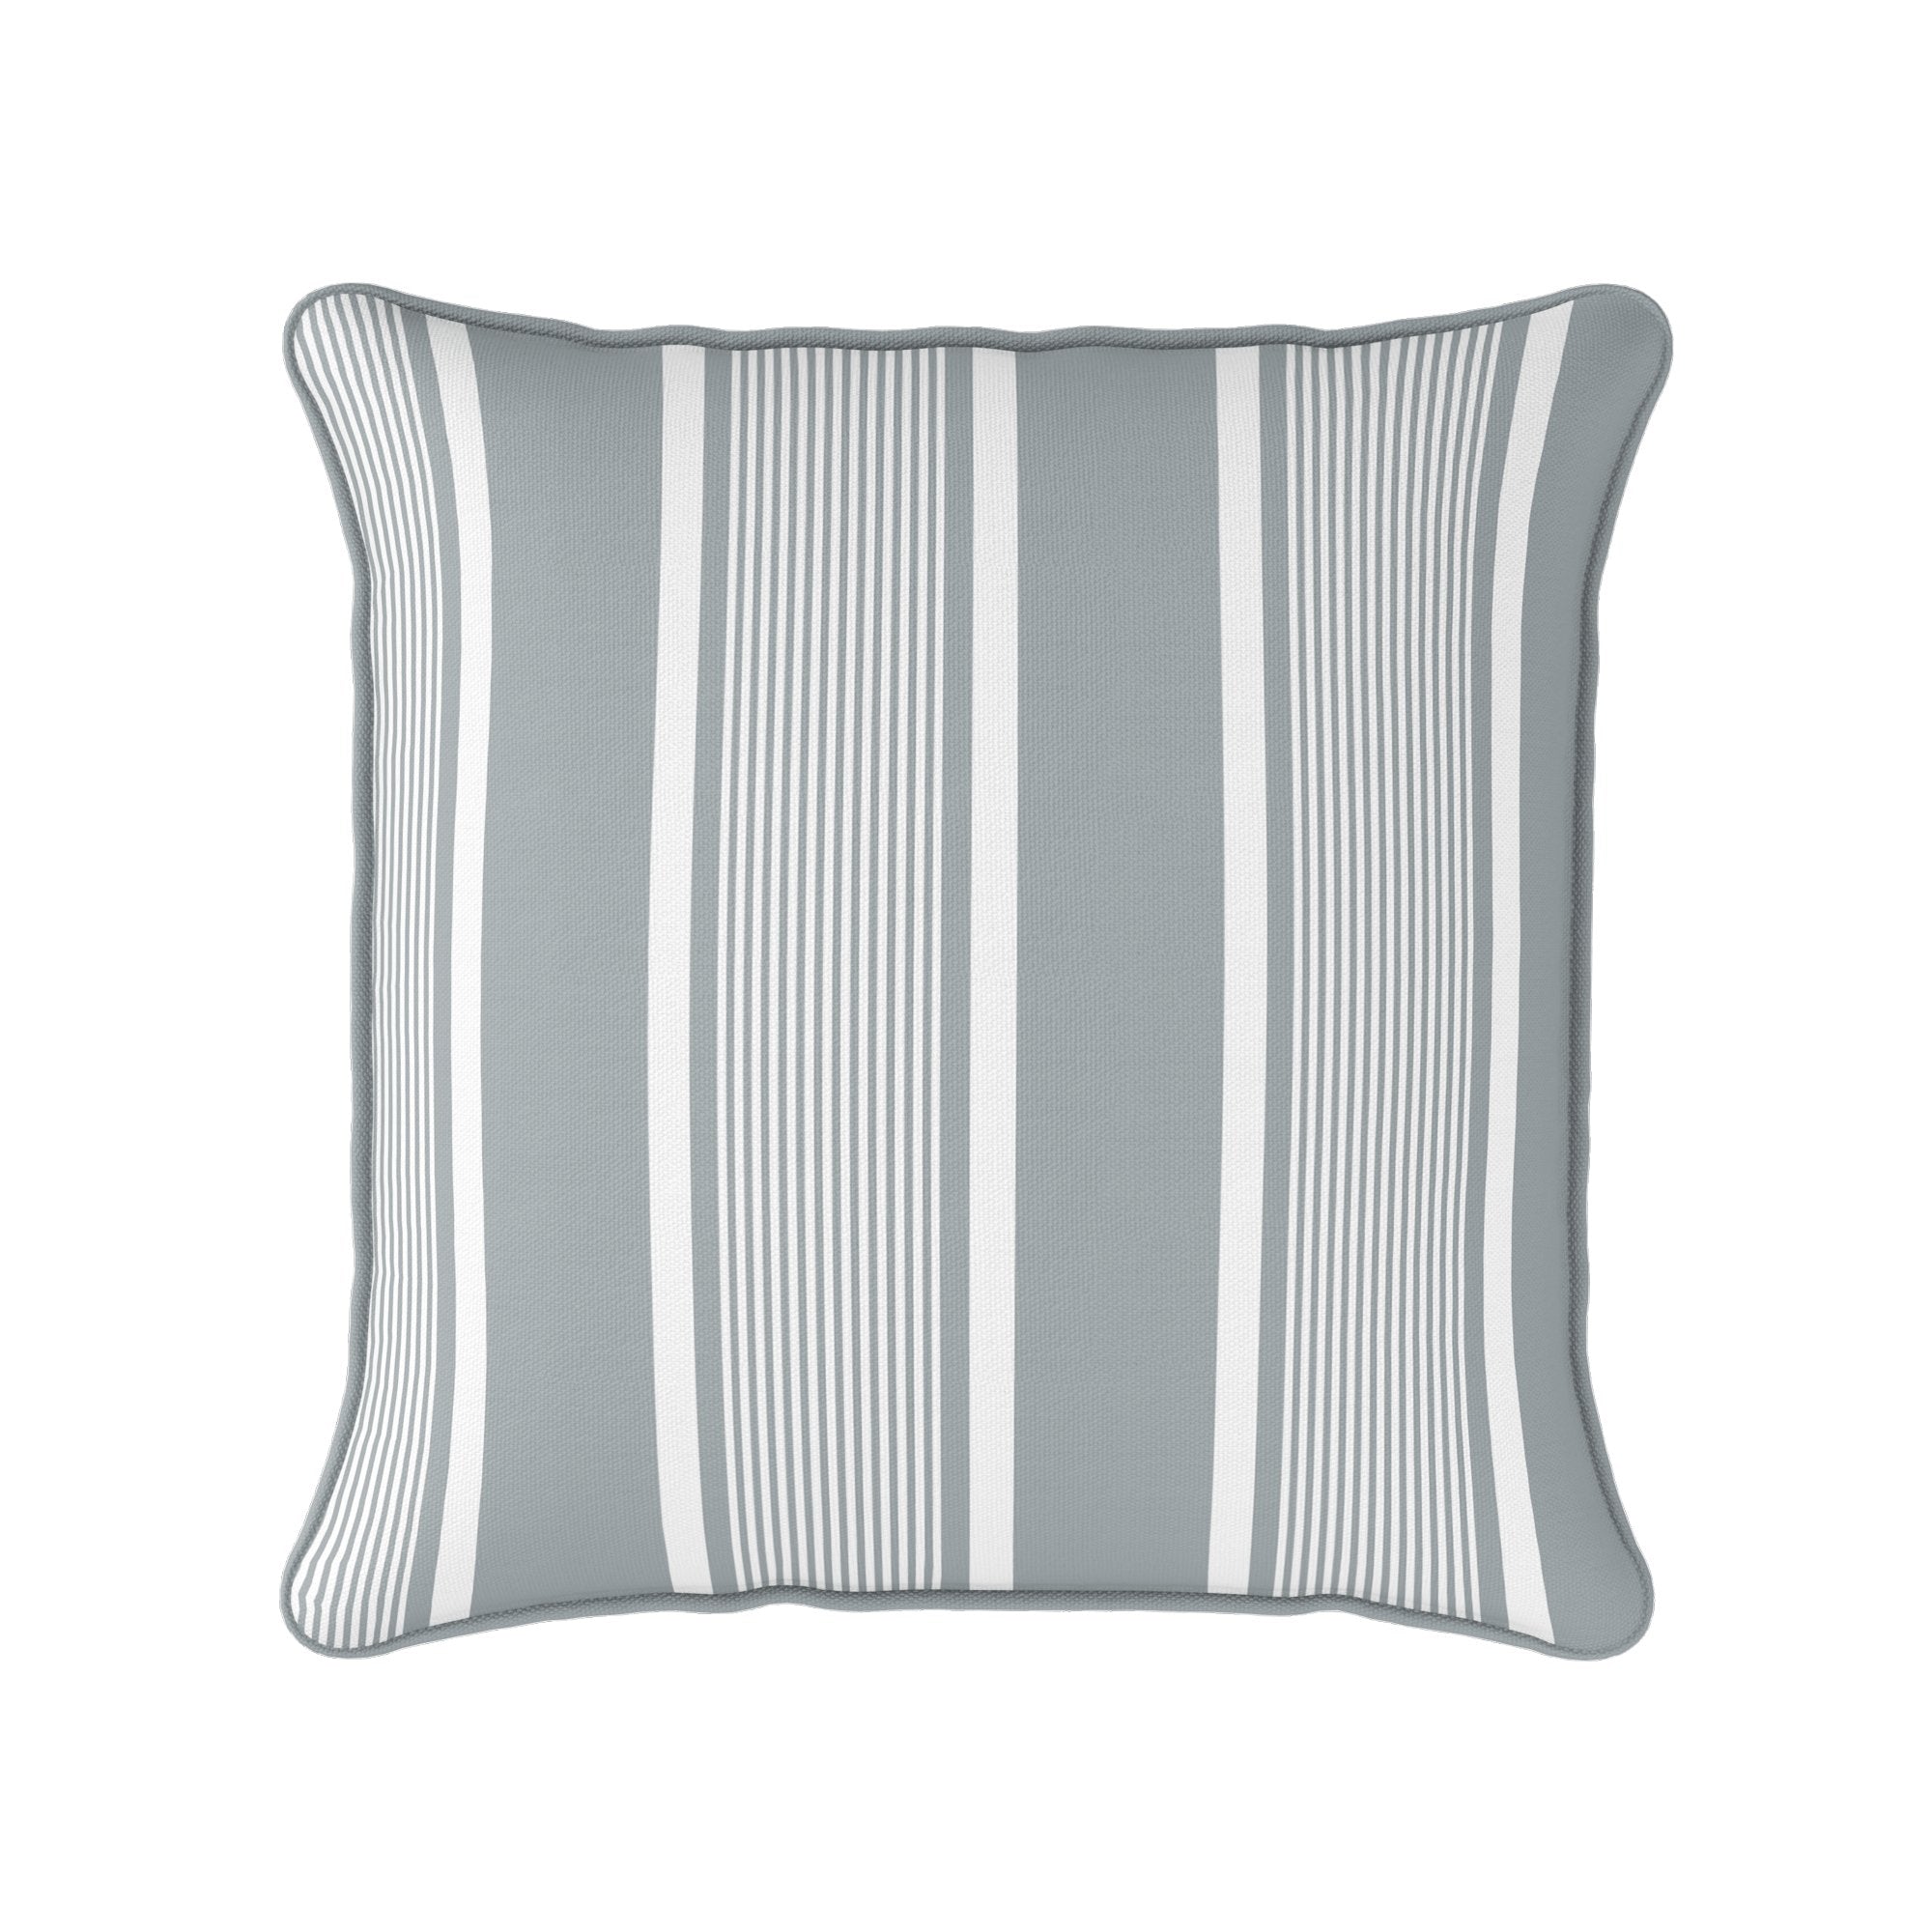 Deckchair Stripe Cushion - Neutrals - Hydrangea Lane Home